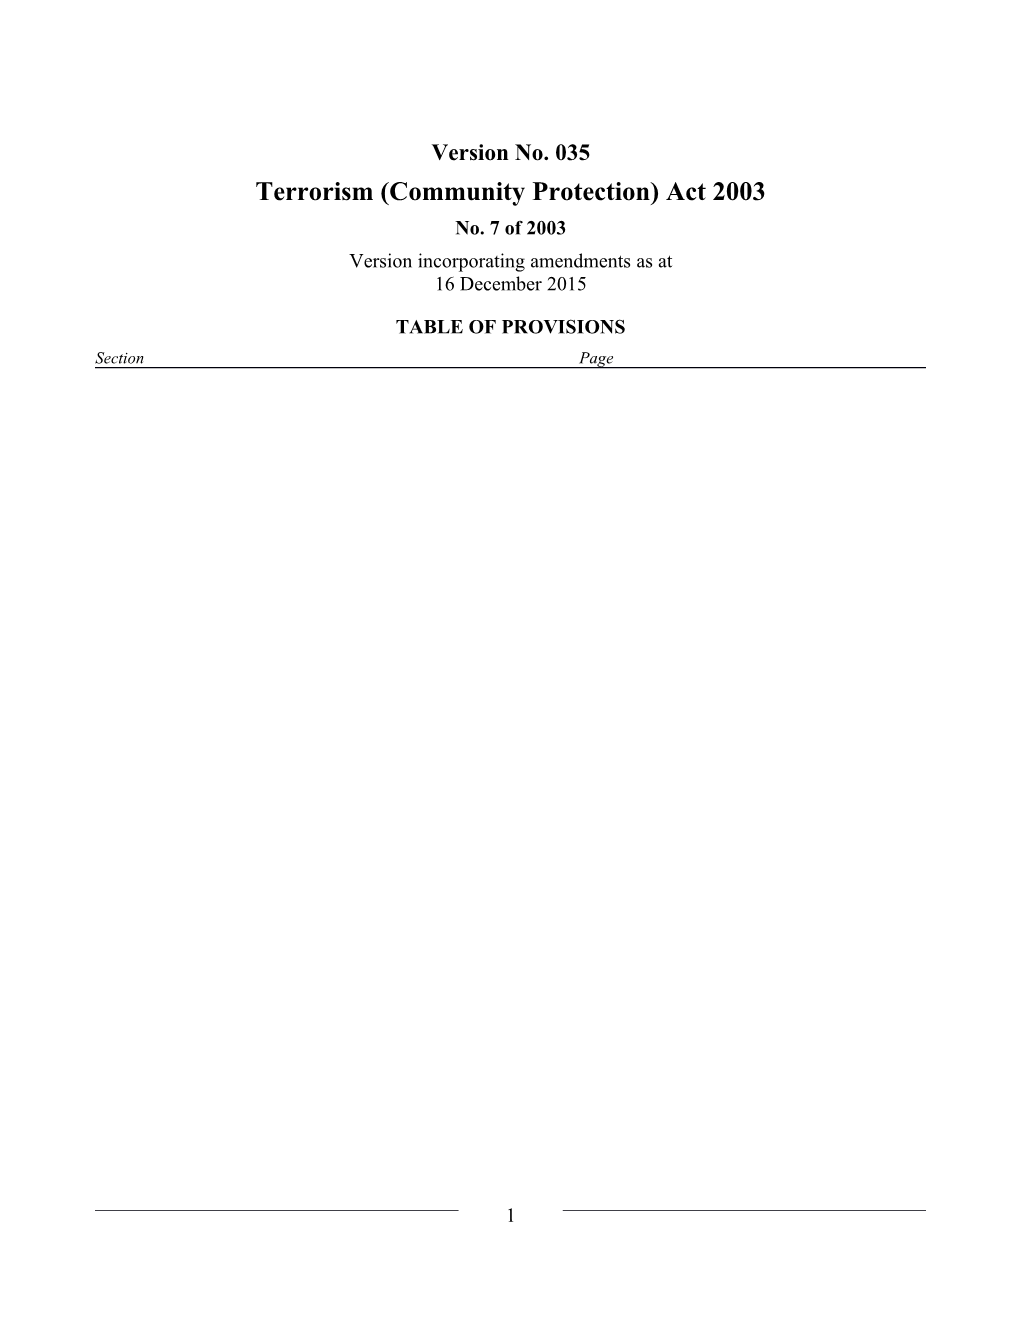 Terrorism (Community Protection) Act 2003